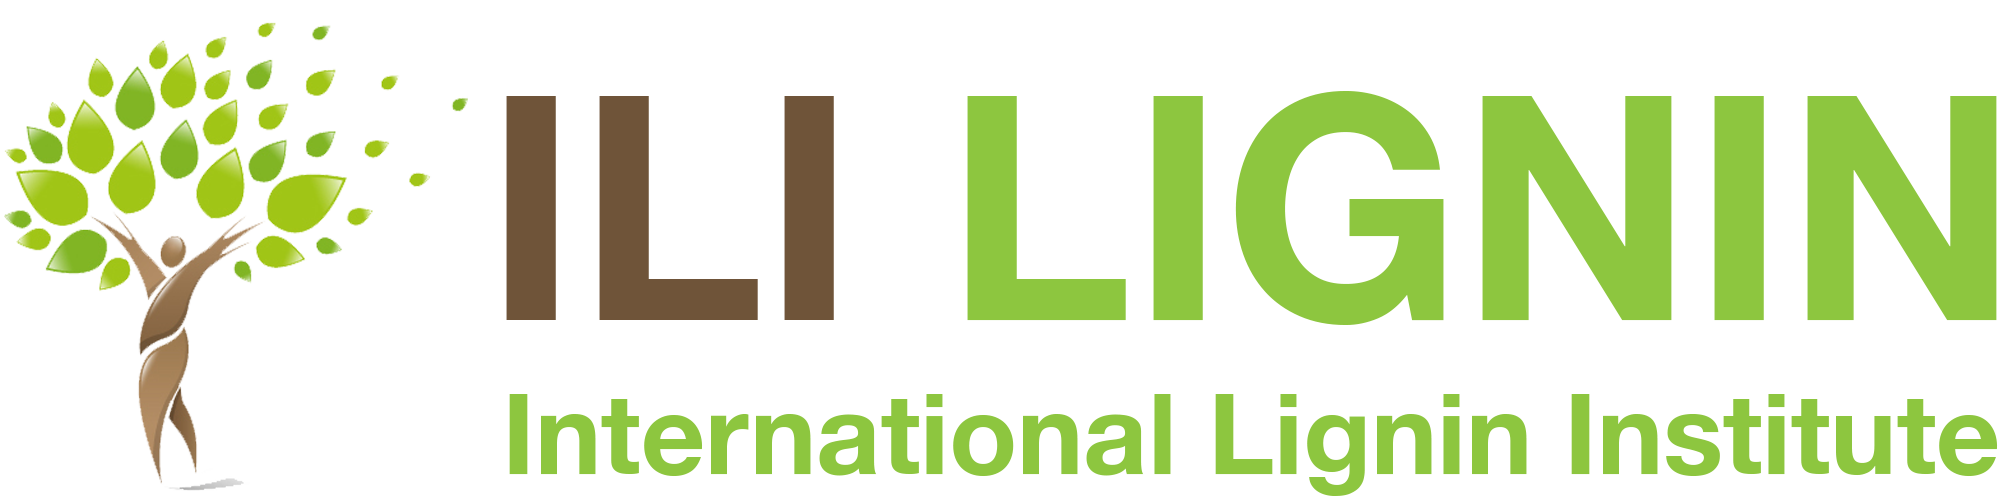 logo ILI-Lignin